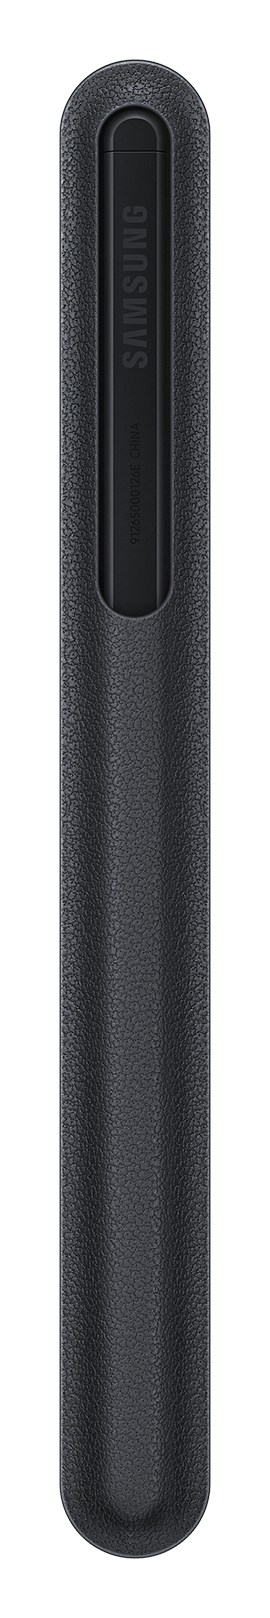 Fold5 S Pen Fold Edition Black